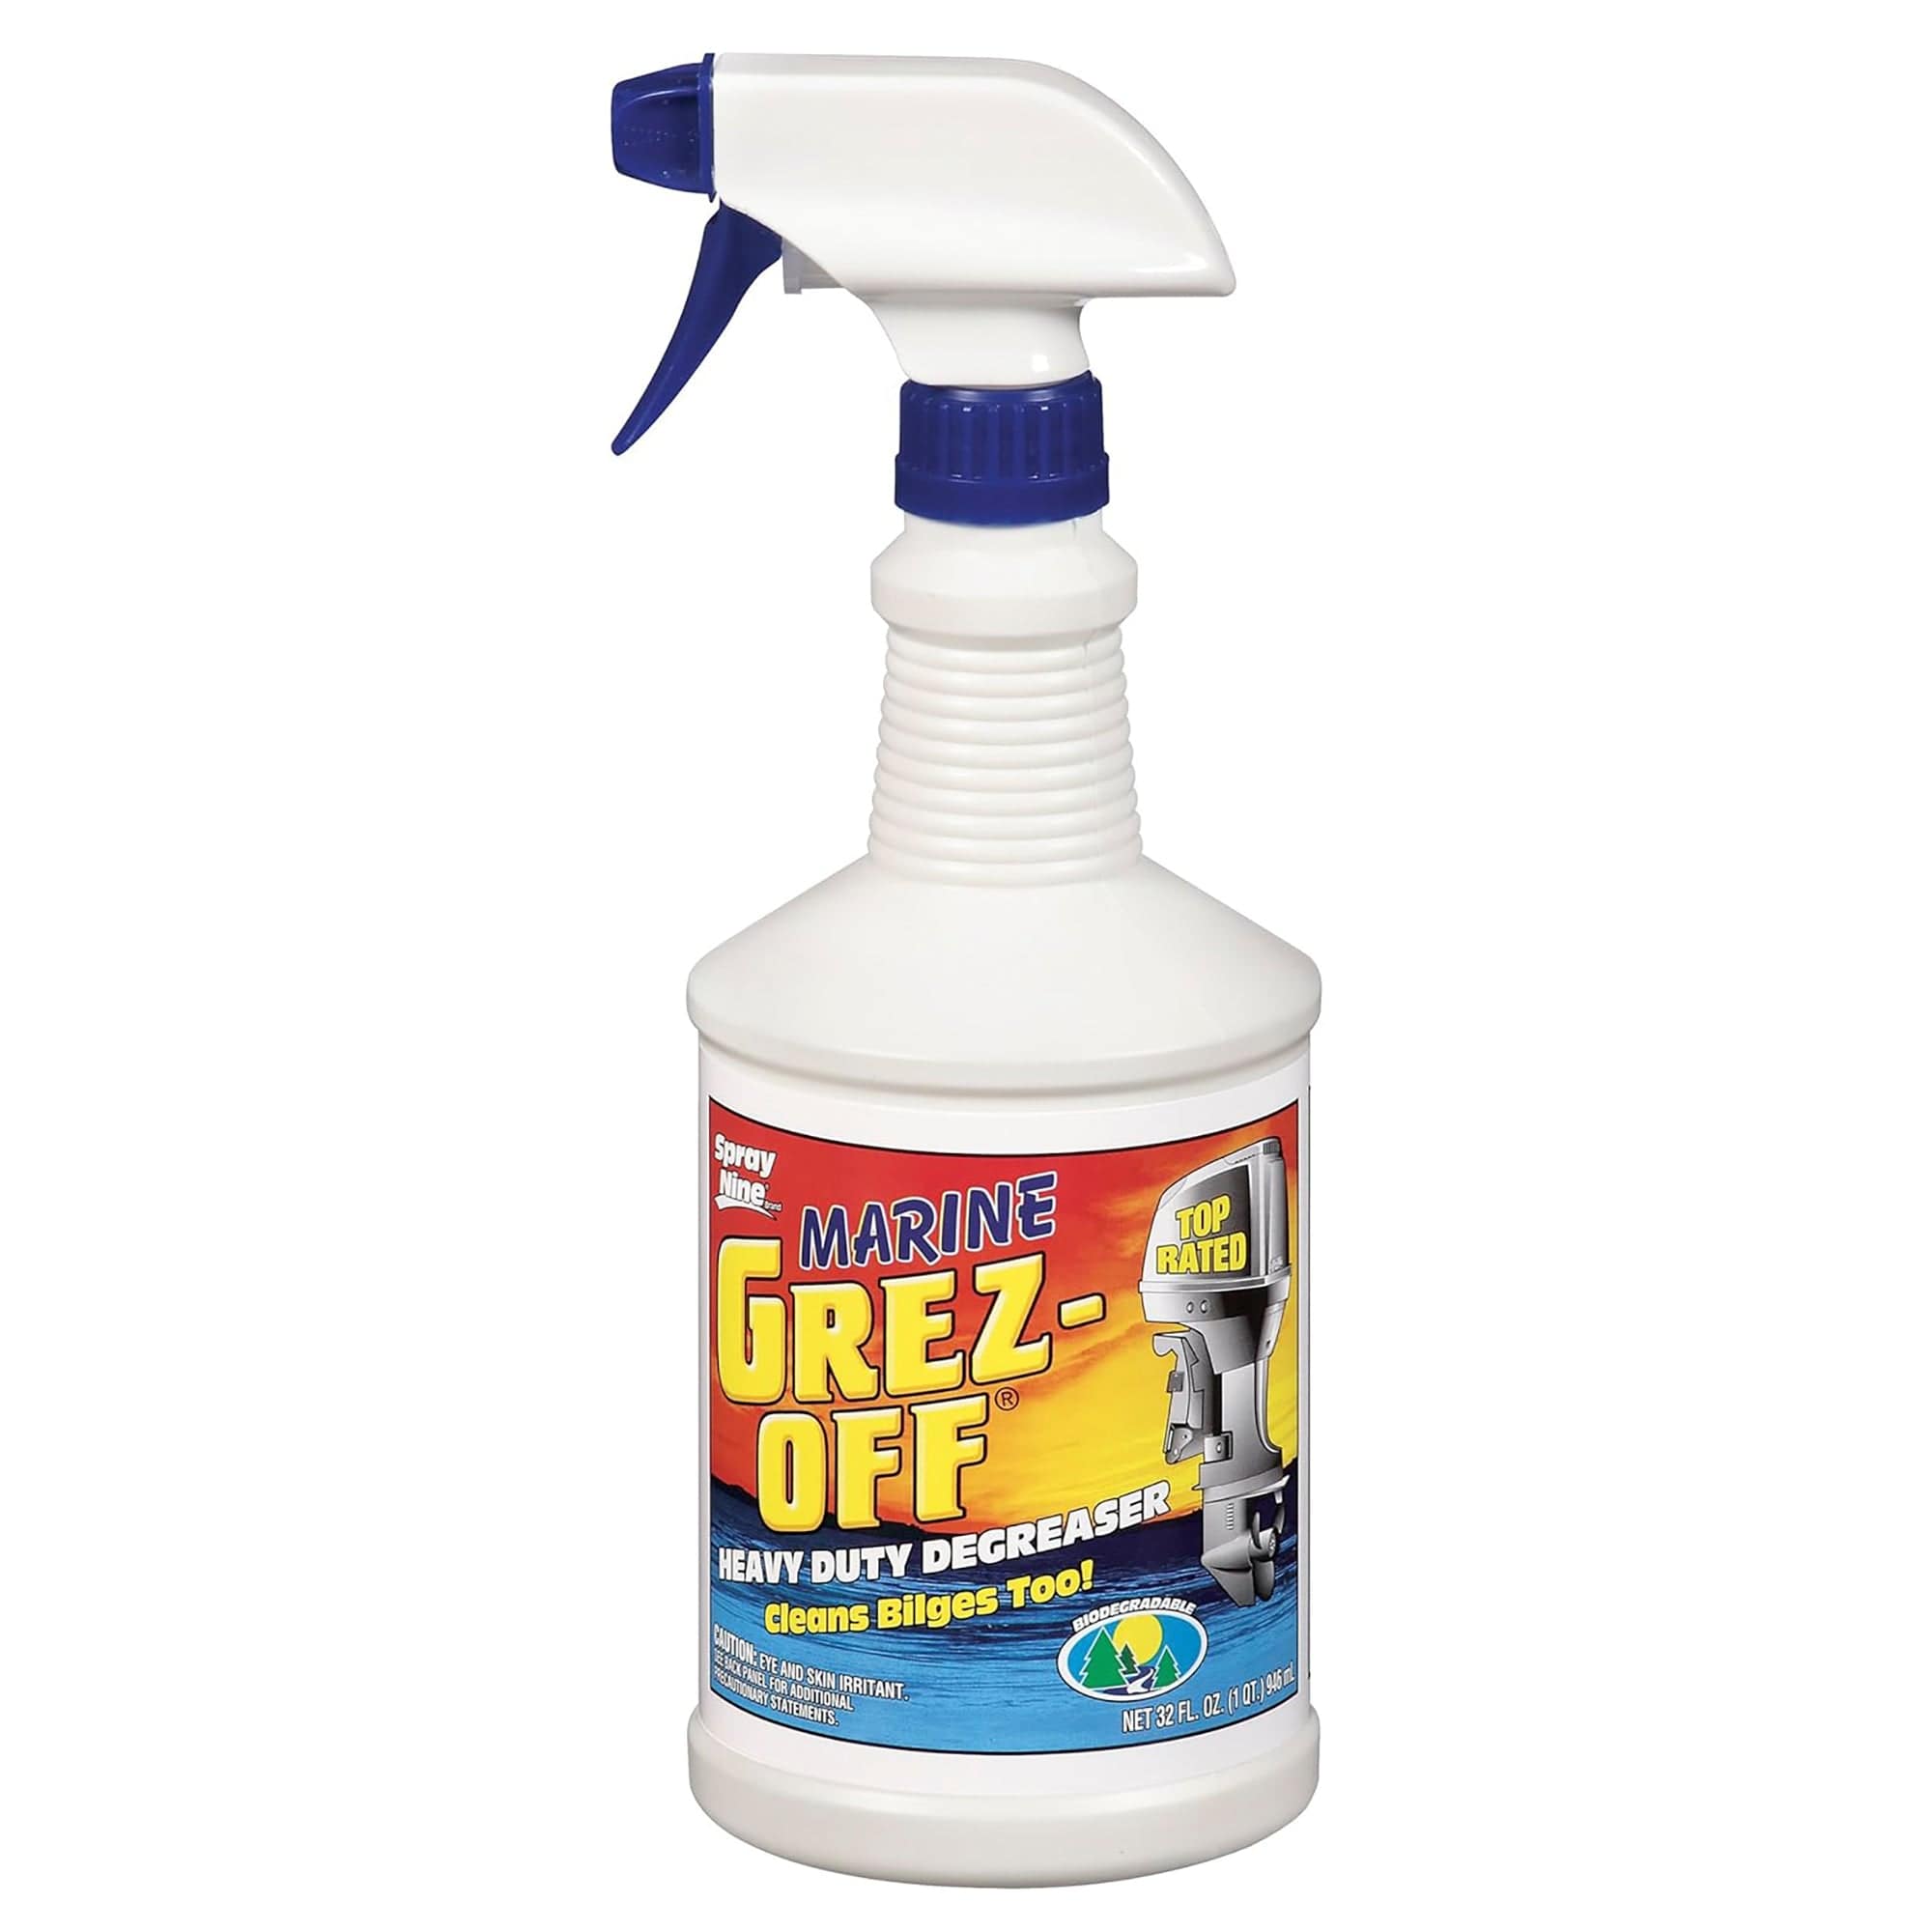 Grez-Off Heavy Duty Degreaser 32 fl oz. Trigger Spray Bottle - Permatex 30232